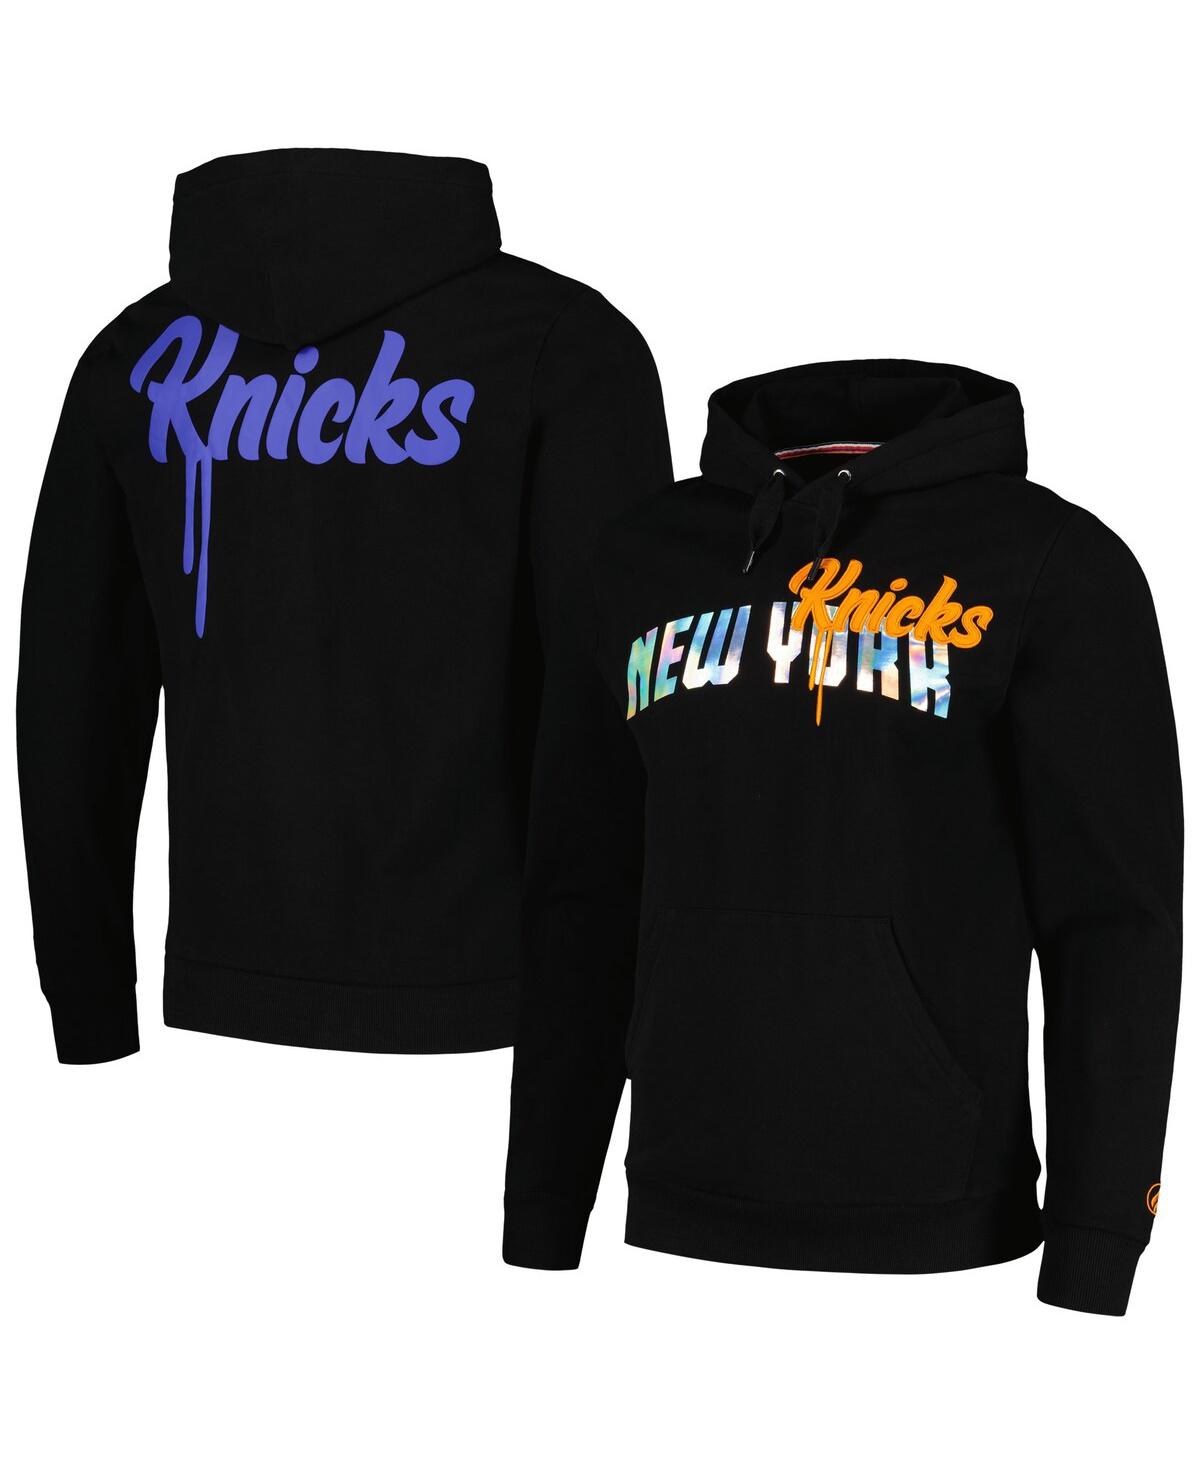 Men's and Women's Fisll Black New York Knicks Reflective Metallic Pullover Hoodie - Black